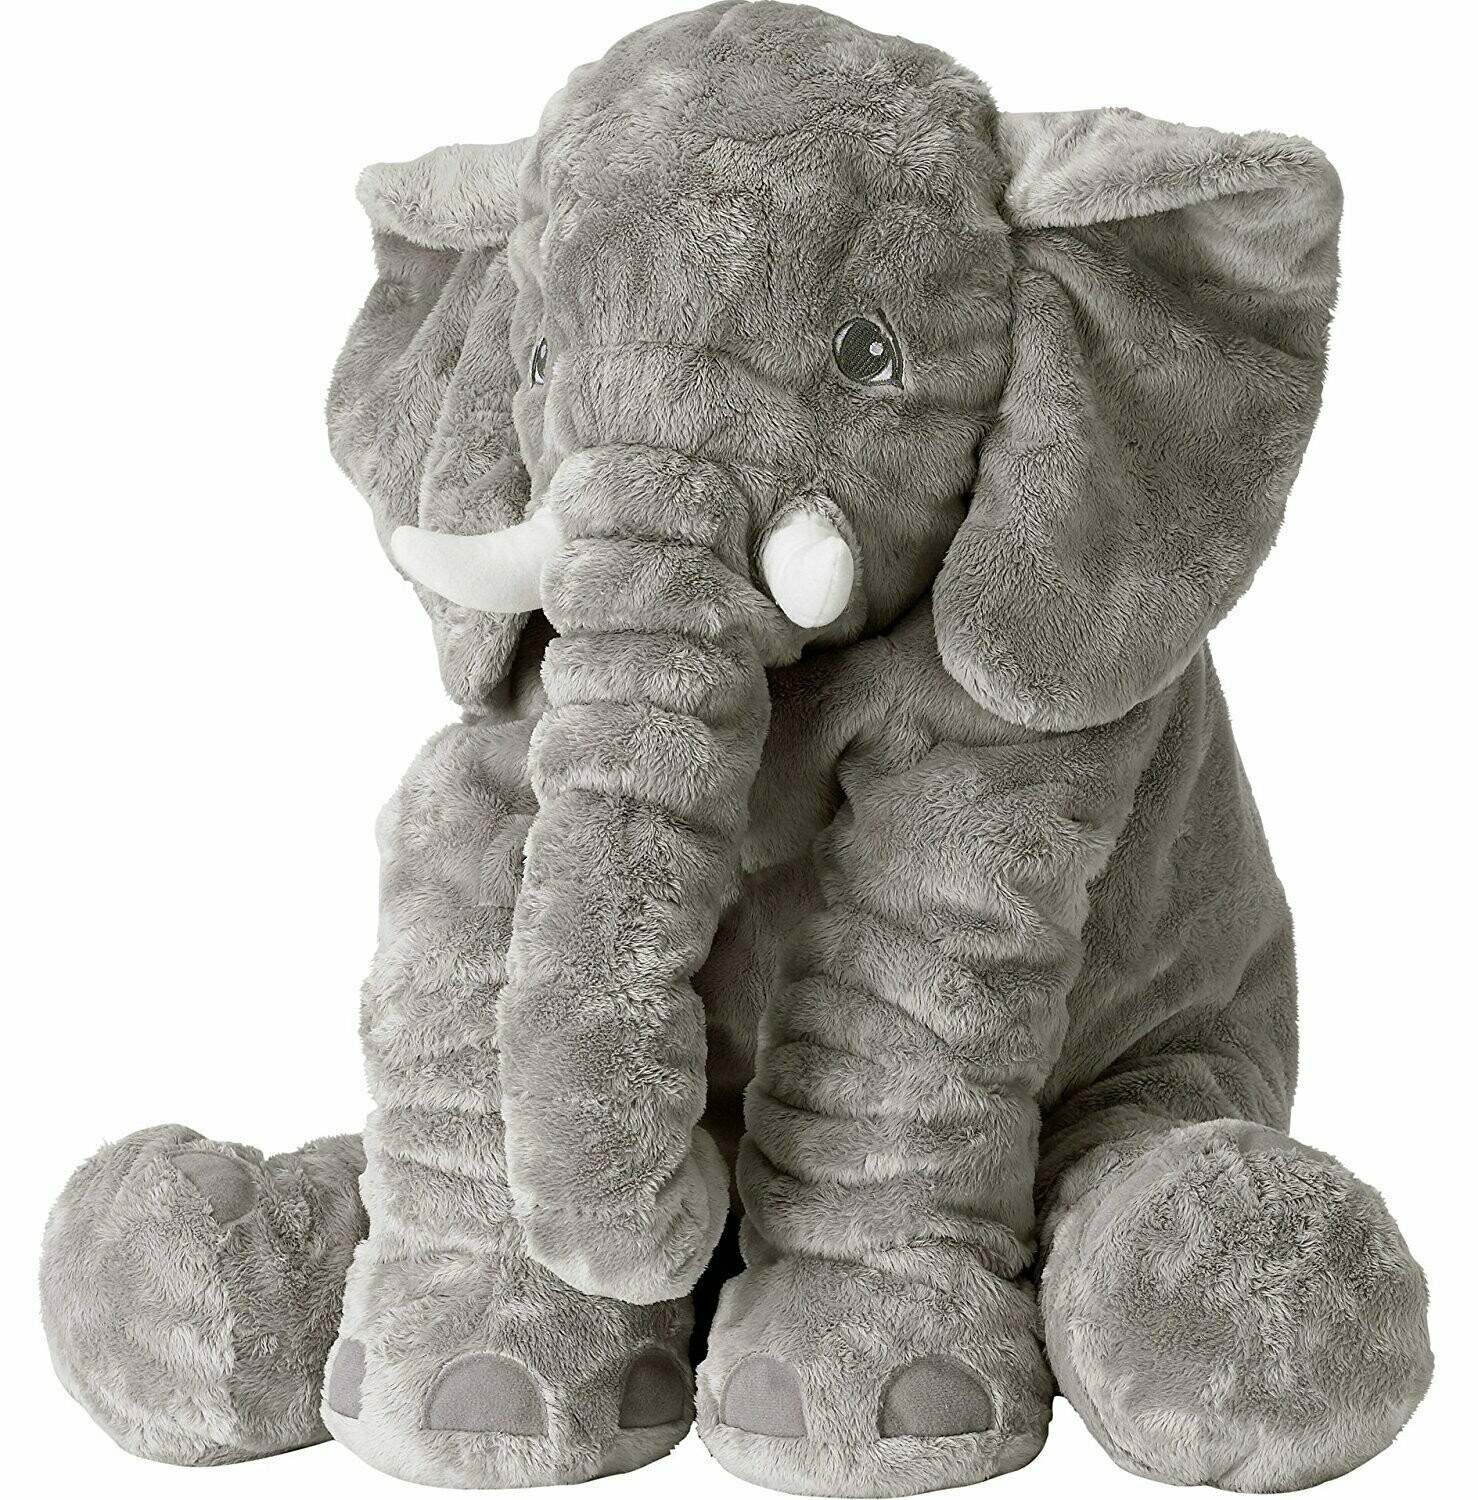 Sooften Stuffed Elephant Plush Toy 24 inch/60cm Gray